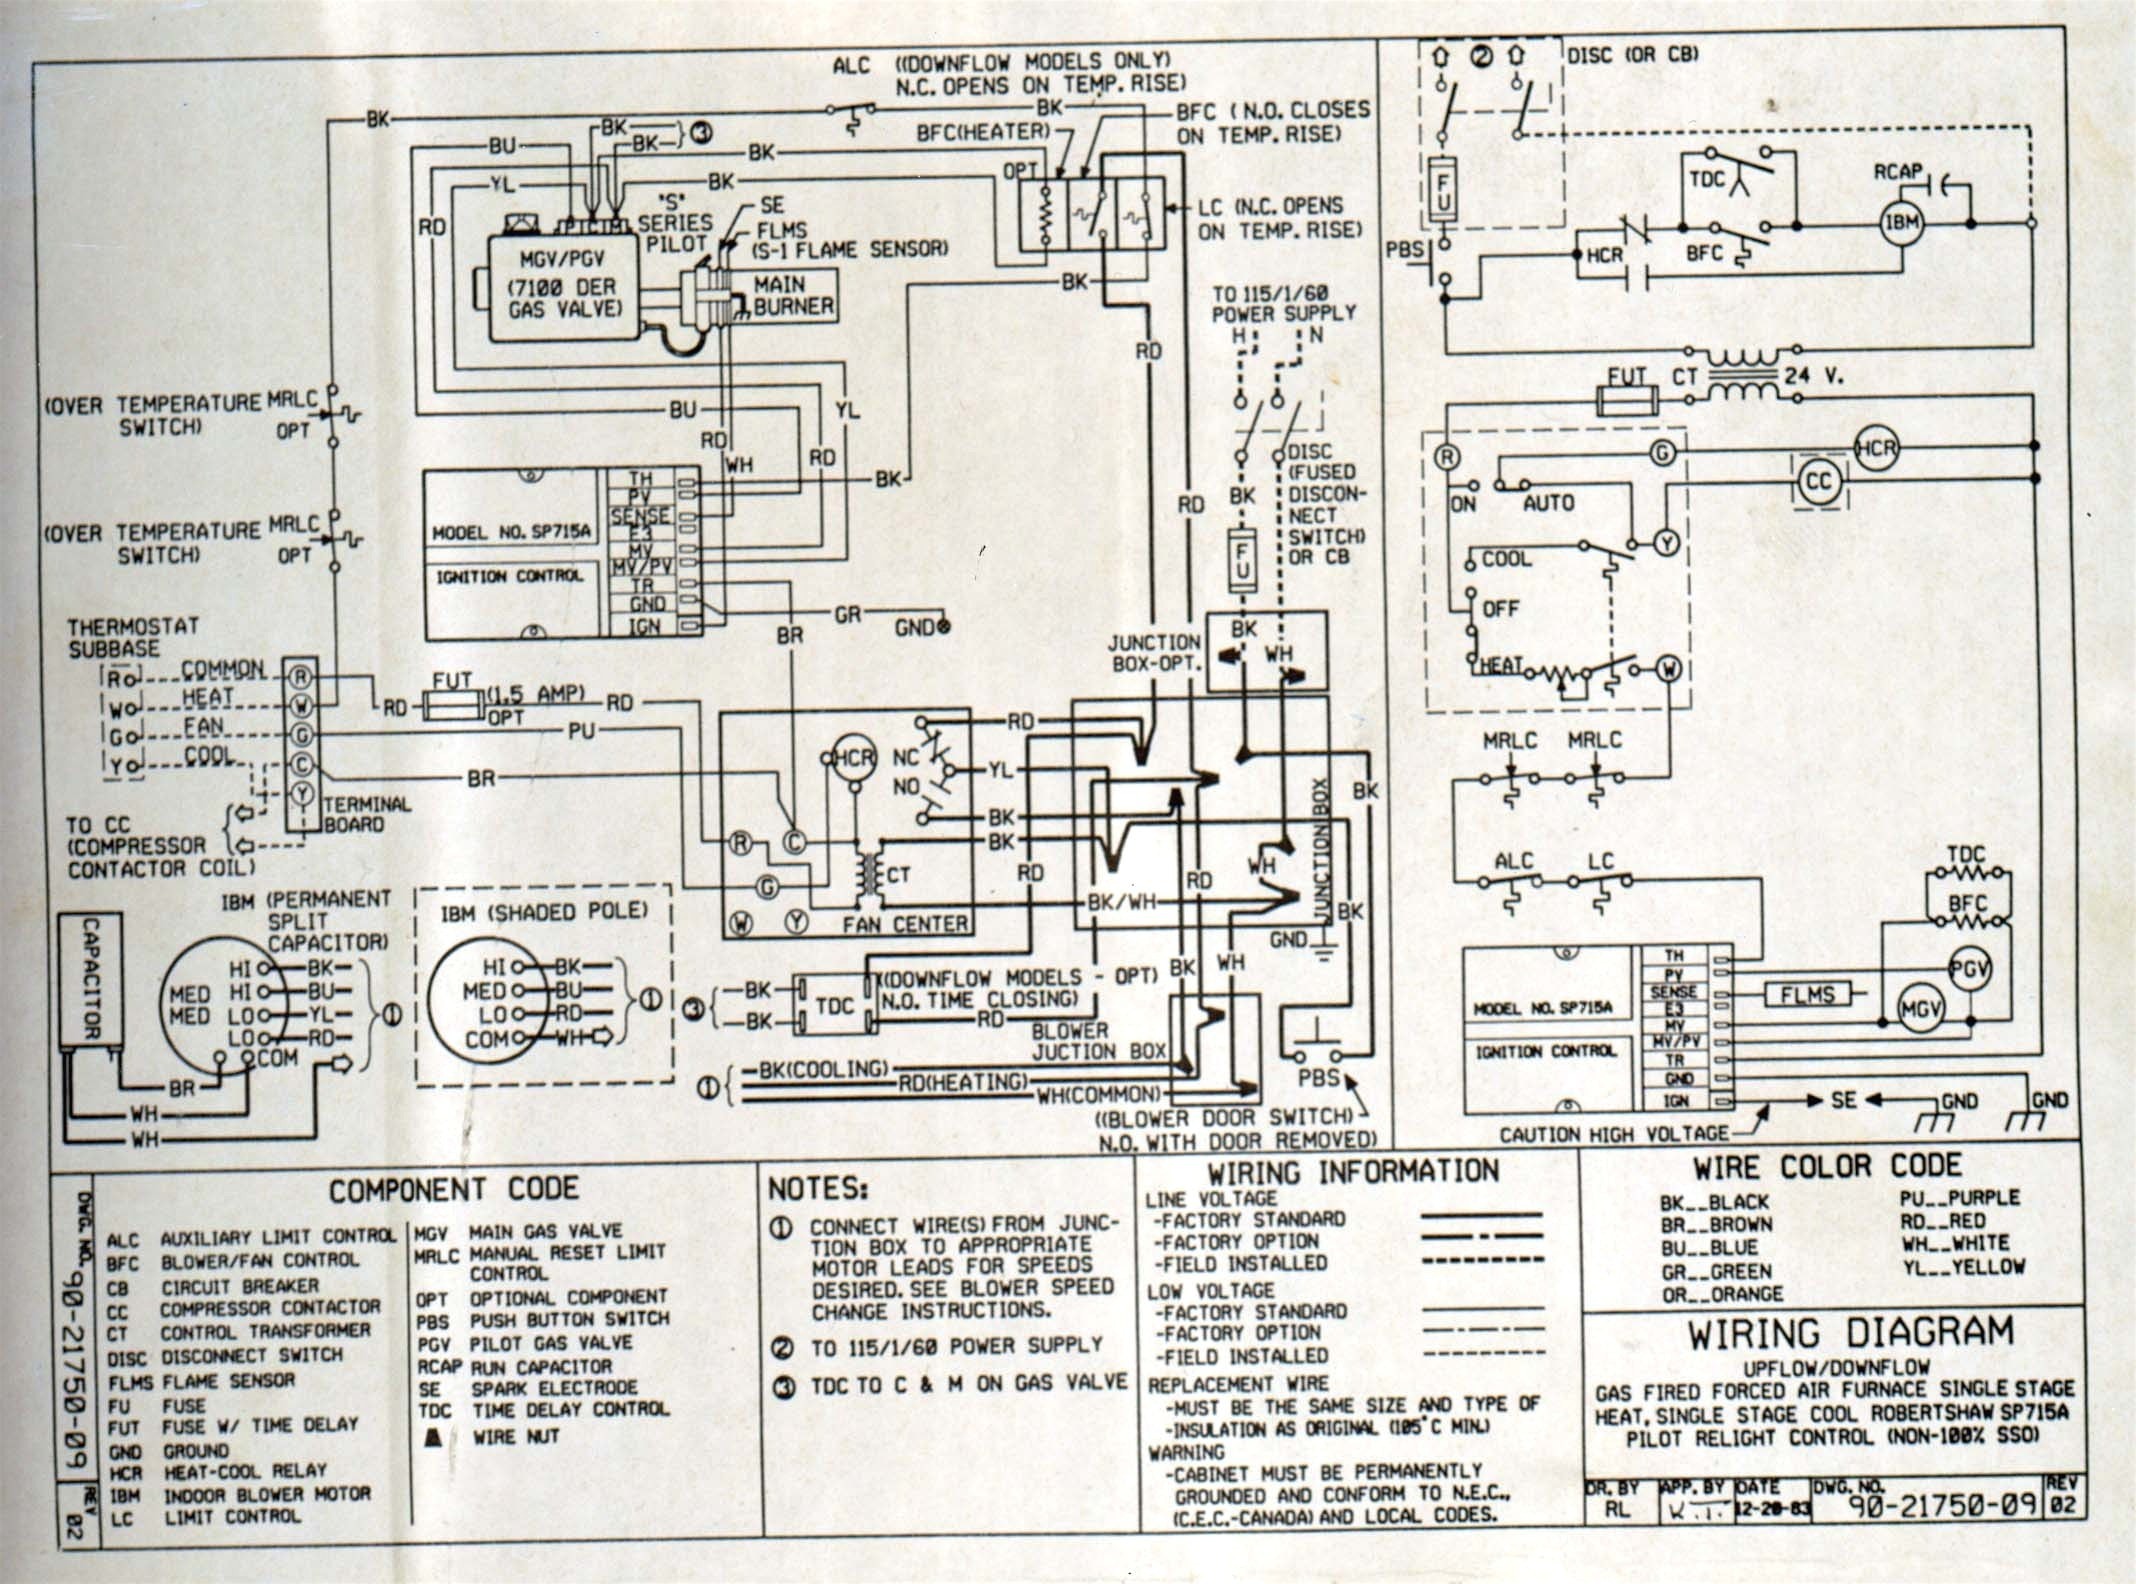 Electric Heat Strip Wiring Diagram Best Goodman Pump Troubleshooting Manual Free Diagrams